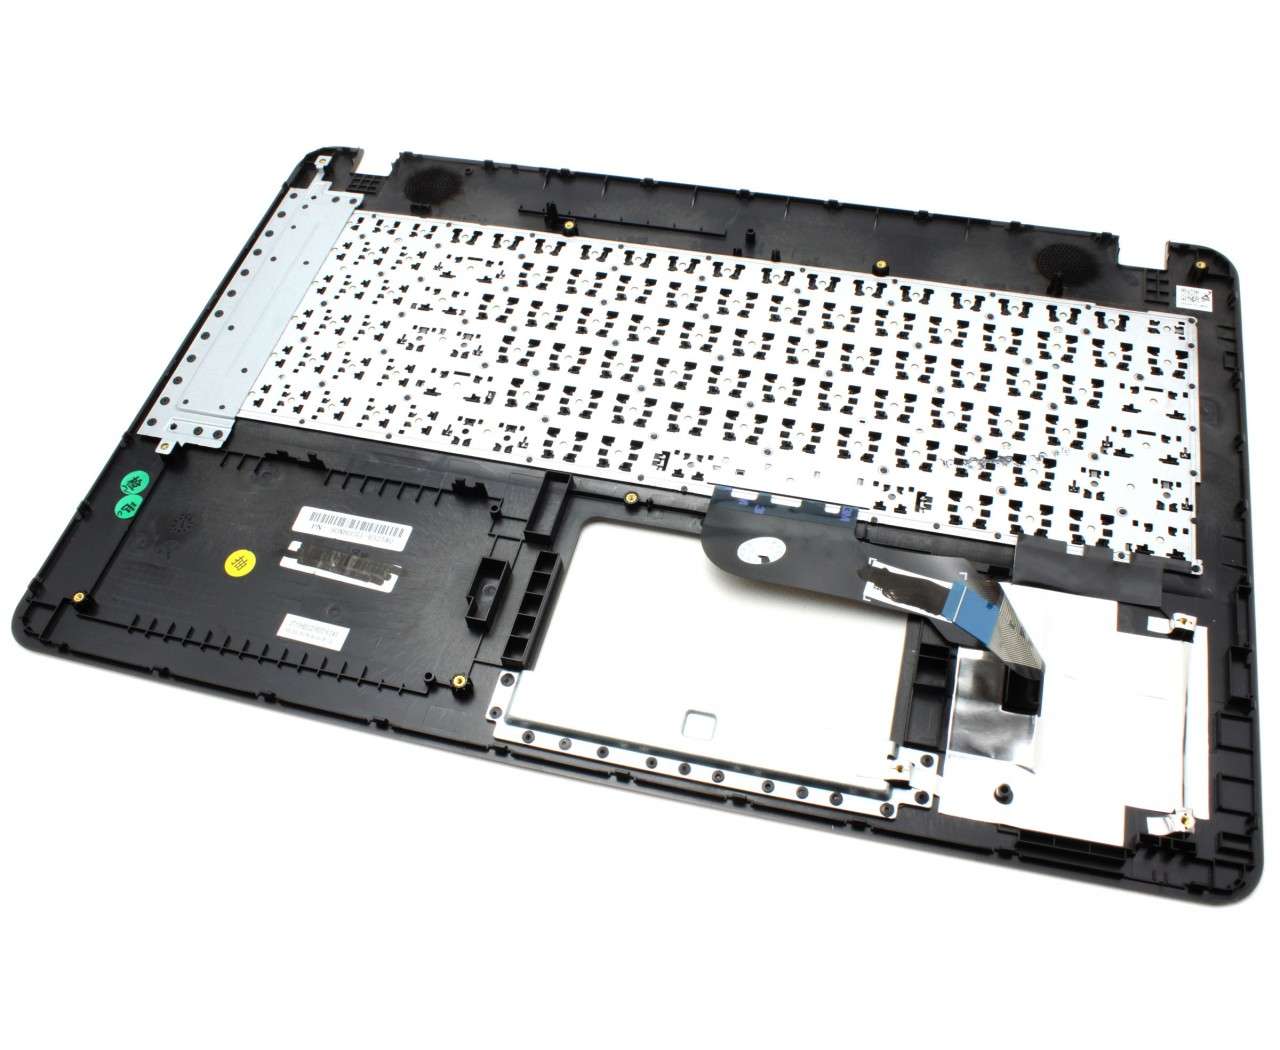 Tastatura Asus F541SA Neagra cu Palmrest Auriu